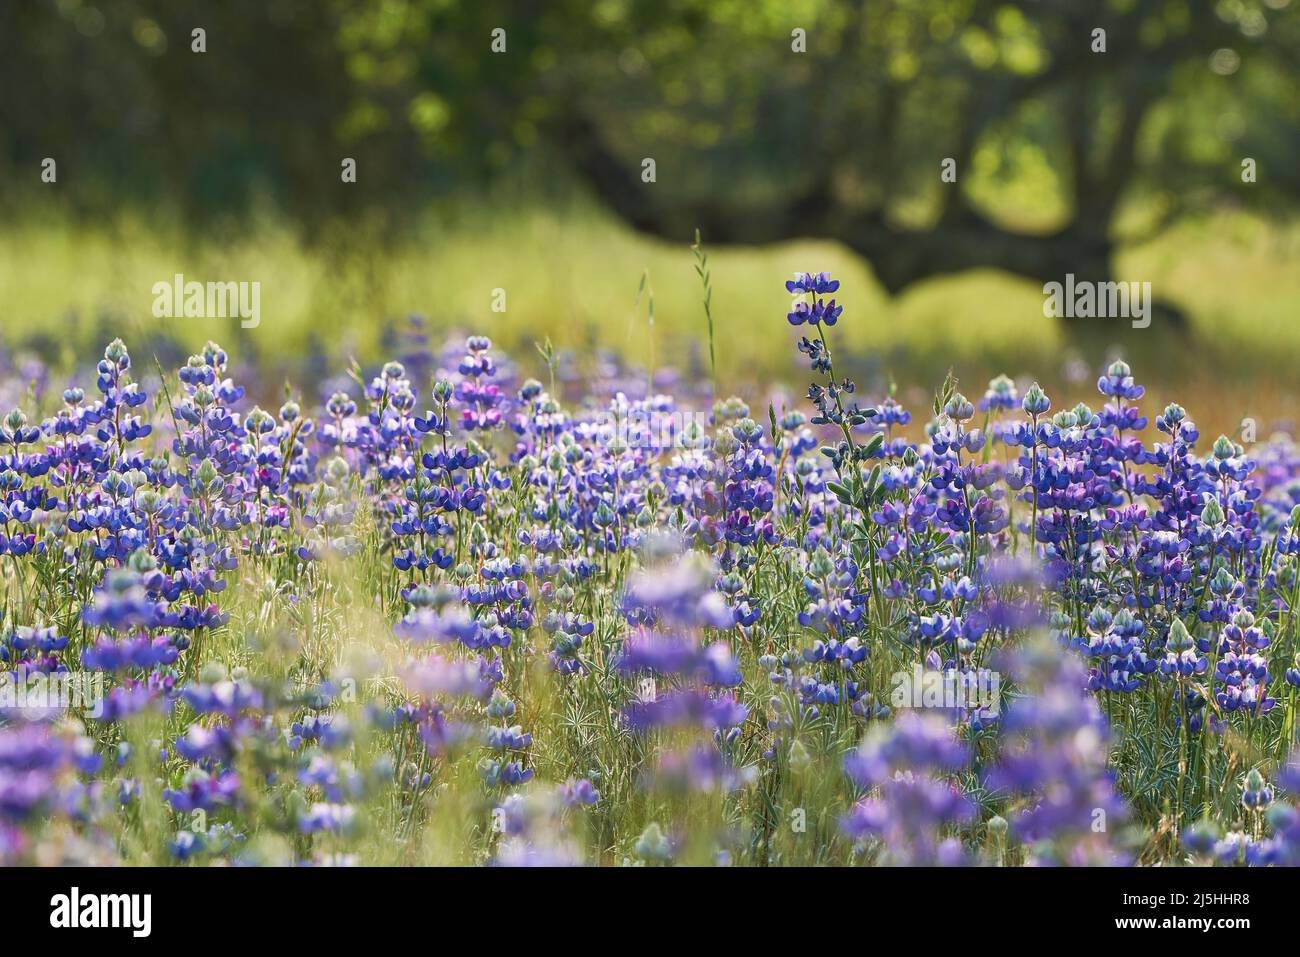 Field of blooming sky lupines, Lupinus nanus, at Windsor, California, USA. Stock Photo